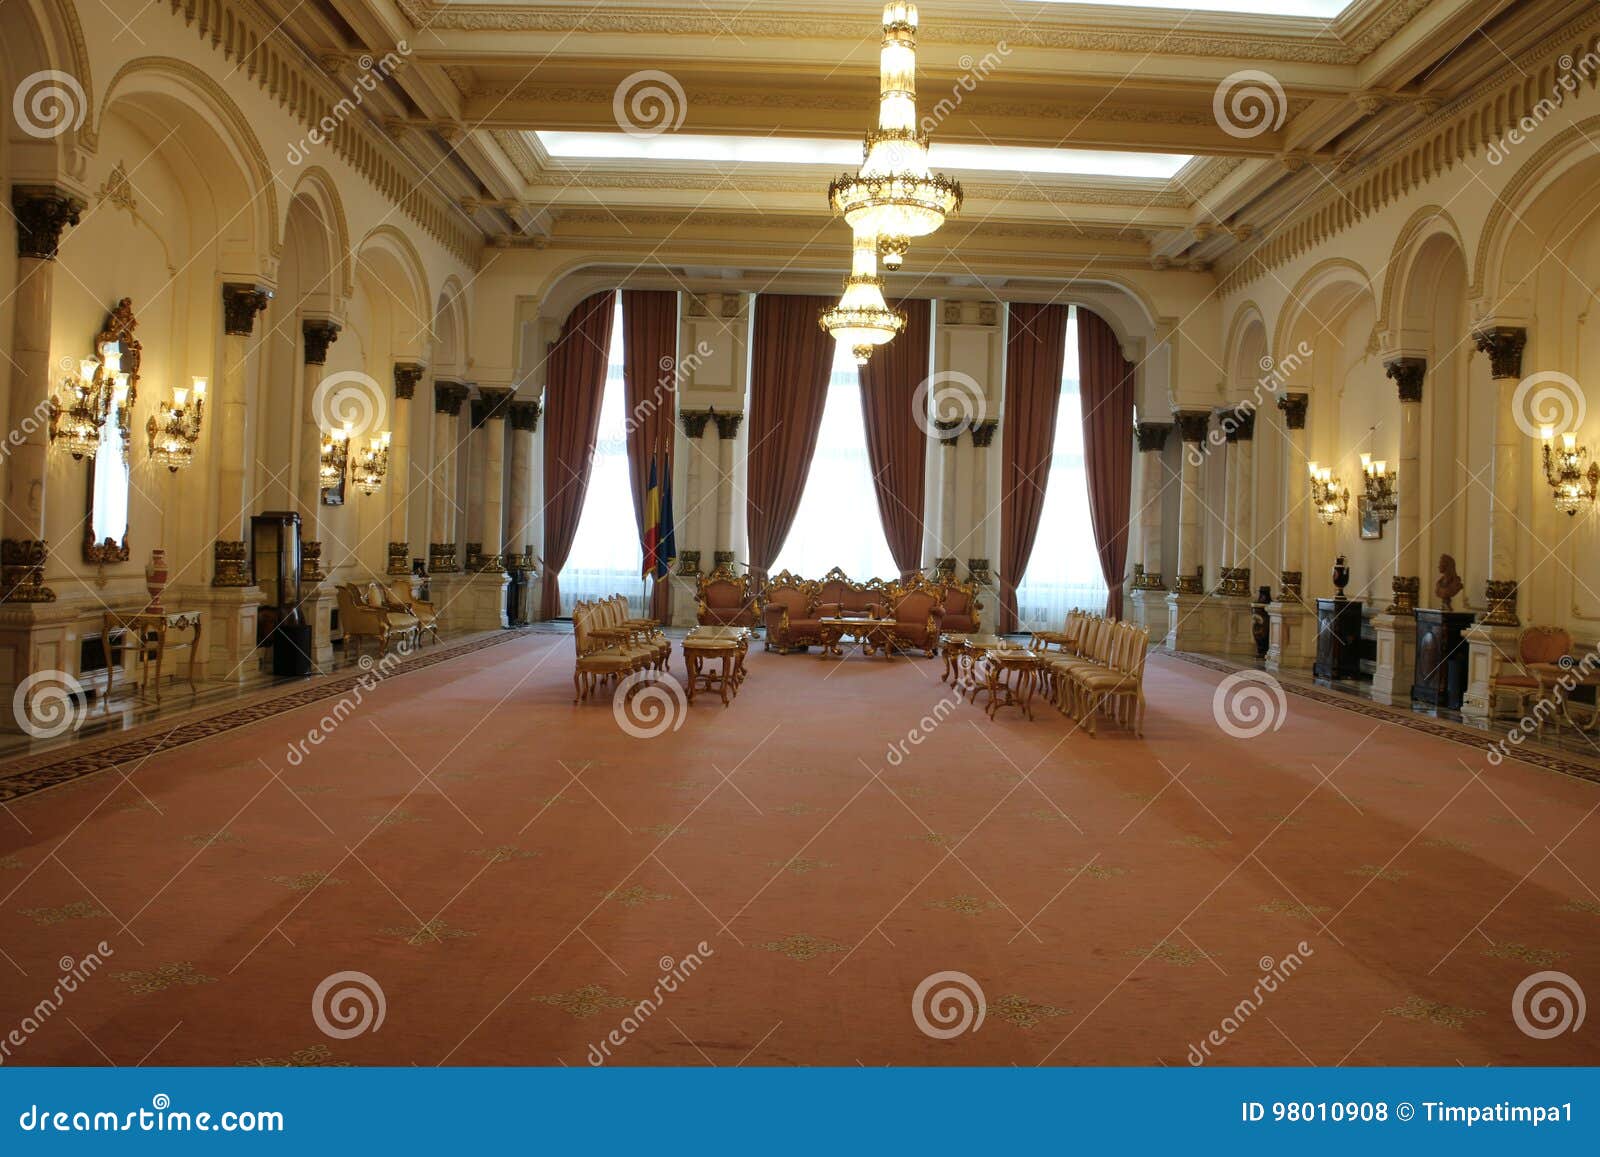 Multiplication Similar teach Hall in Palatul Parlamentului Palace of the Parliament, Bucharest Editorial  Stock Photo - Image of chandelier, palace: 98010908